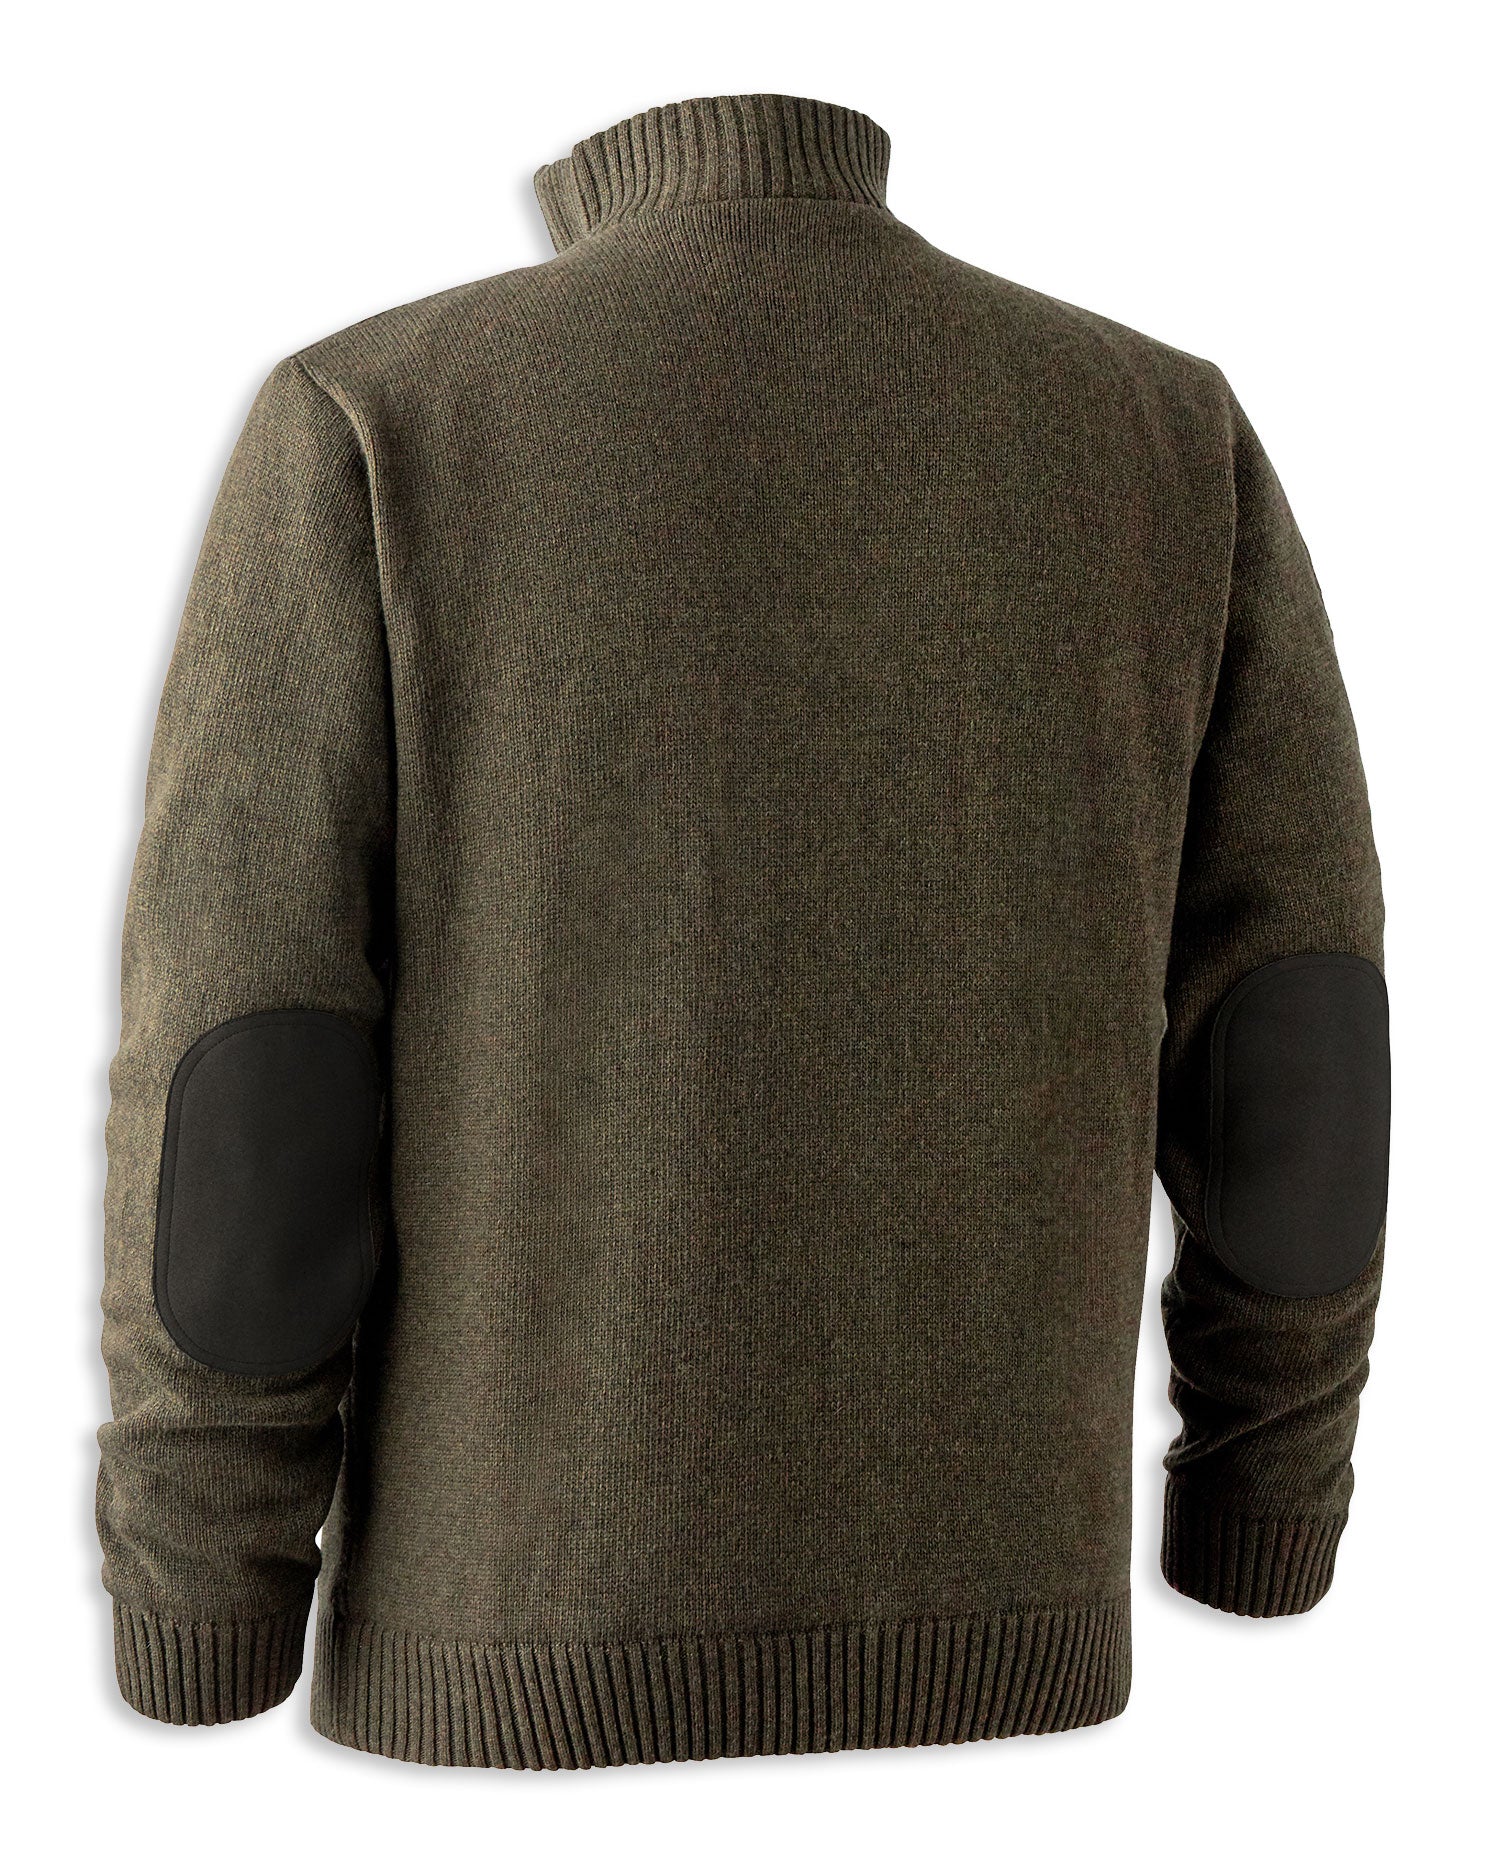 Back Cypress Deerhunter Carlisle Knit with Stormliner Zip Neck Sweater 